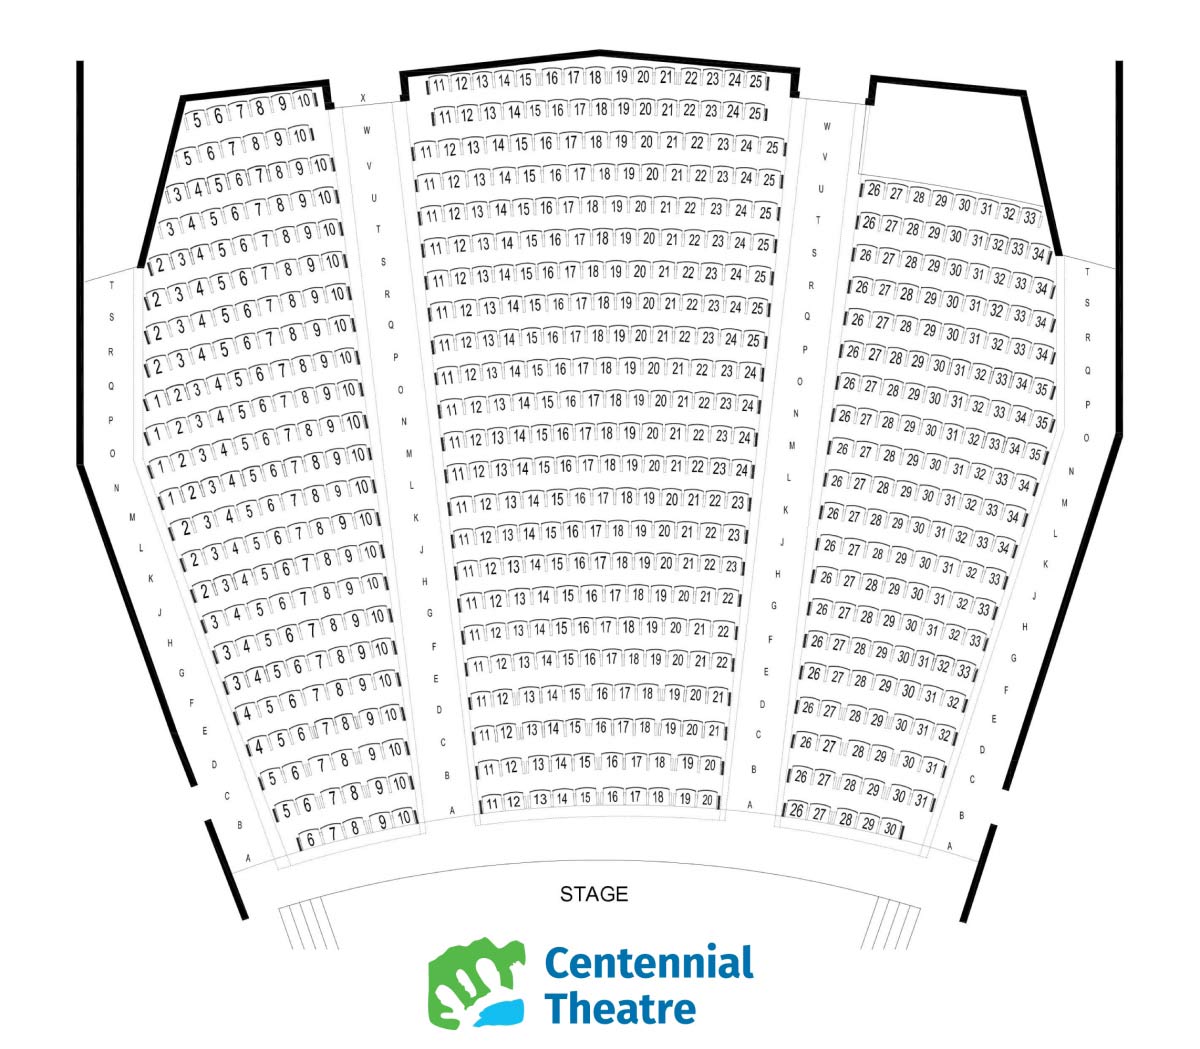 Centennial Theatre Seating Map